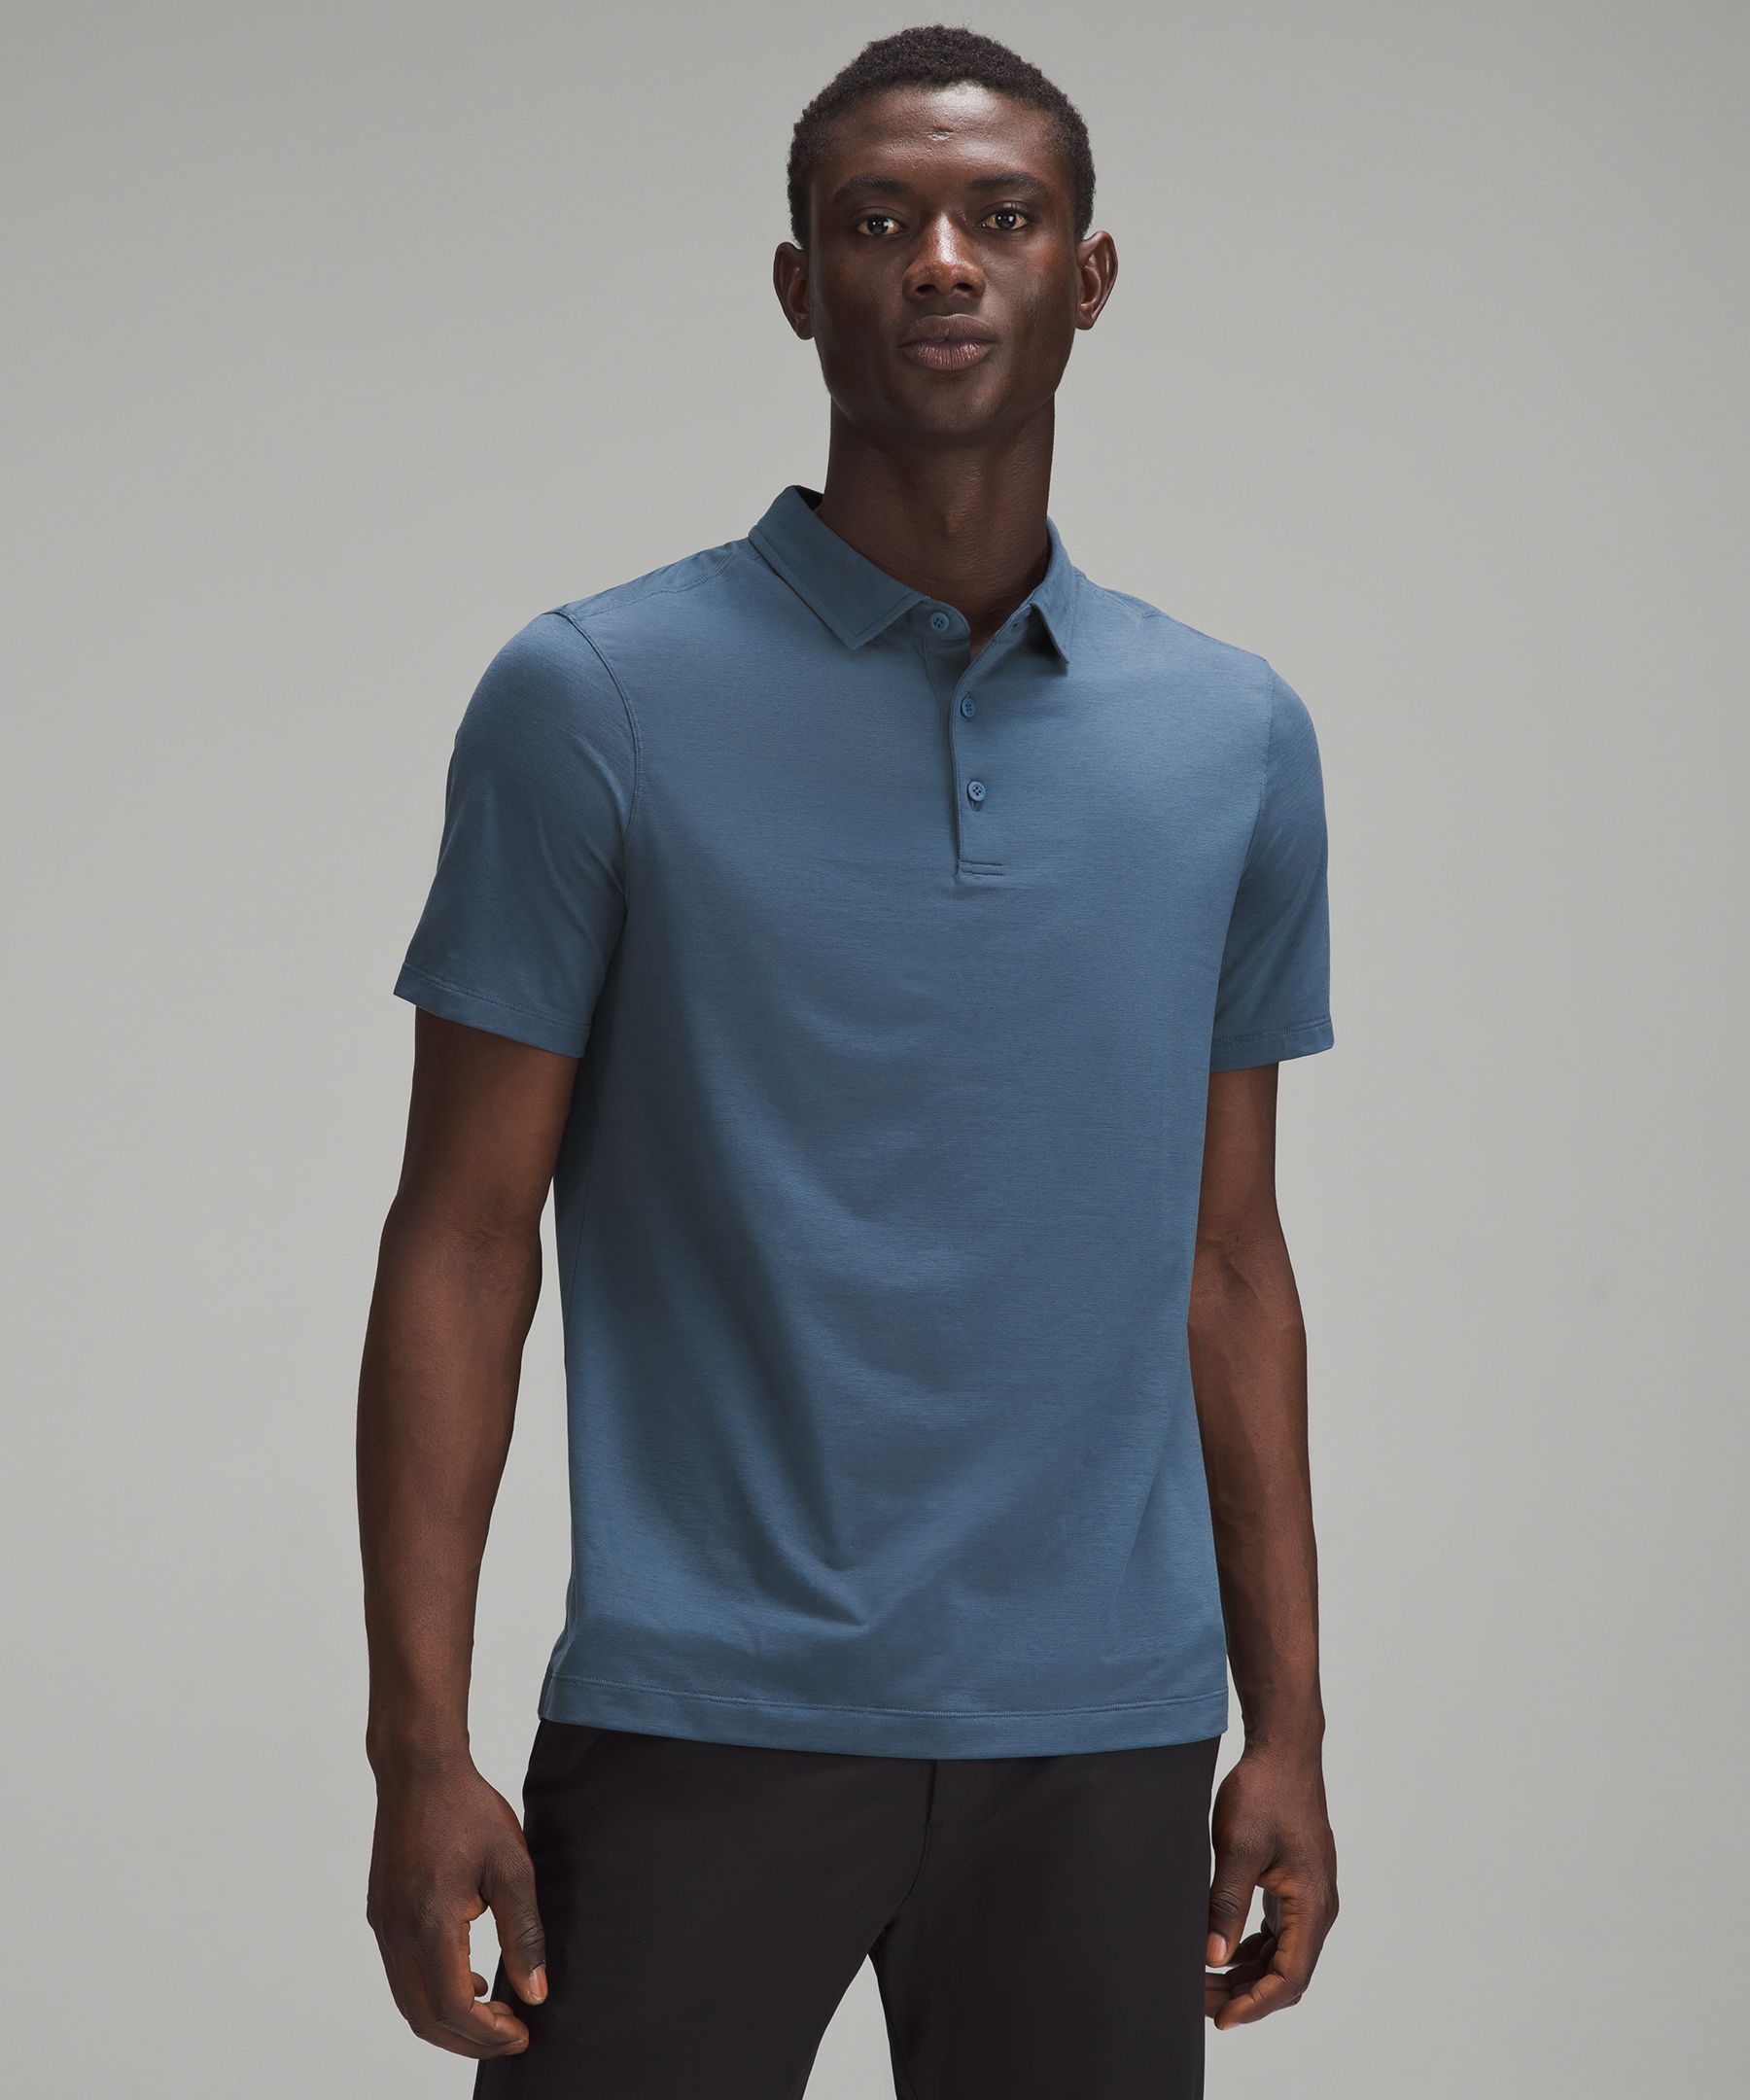 Evolution Short-Sleeve Polo Shirt | Men's Short Sleeve Shirts & Tee's ...